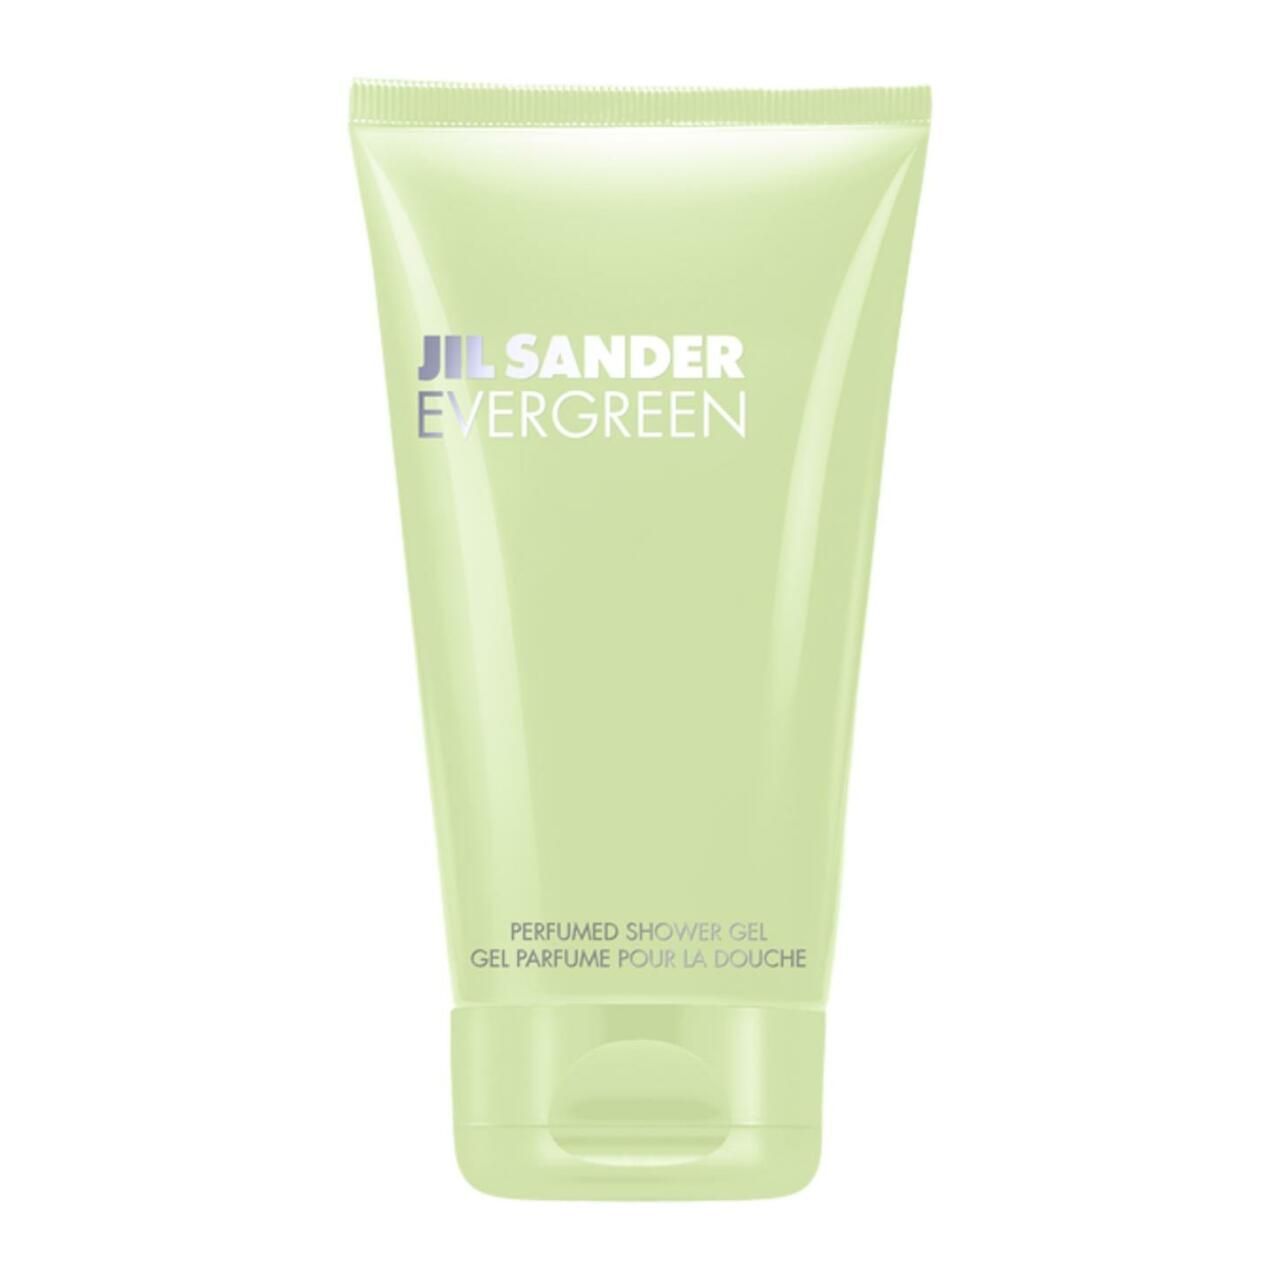 Jil Sander, Evergreen Perfumed Shower Gel